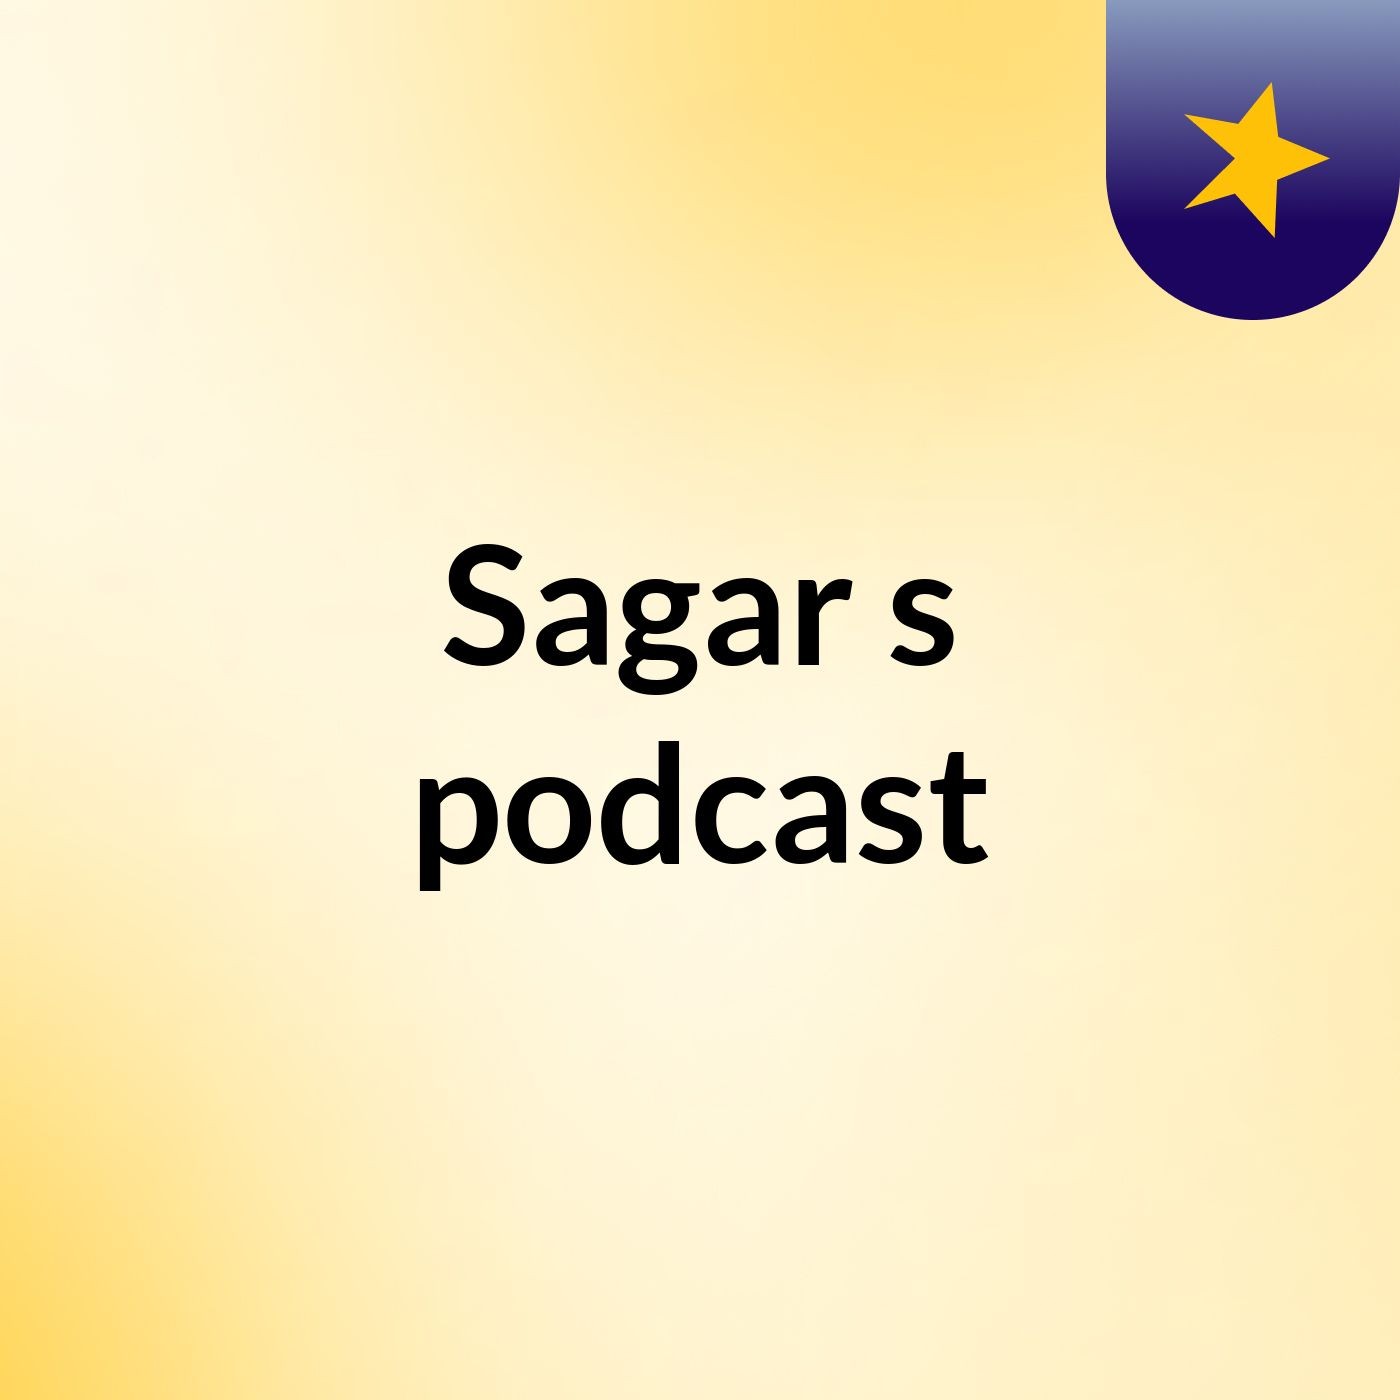 Episode 3 - Sagar's podcast